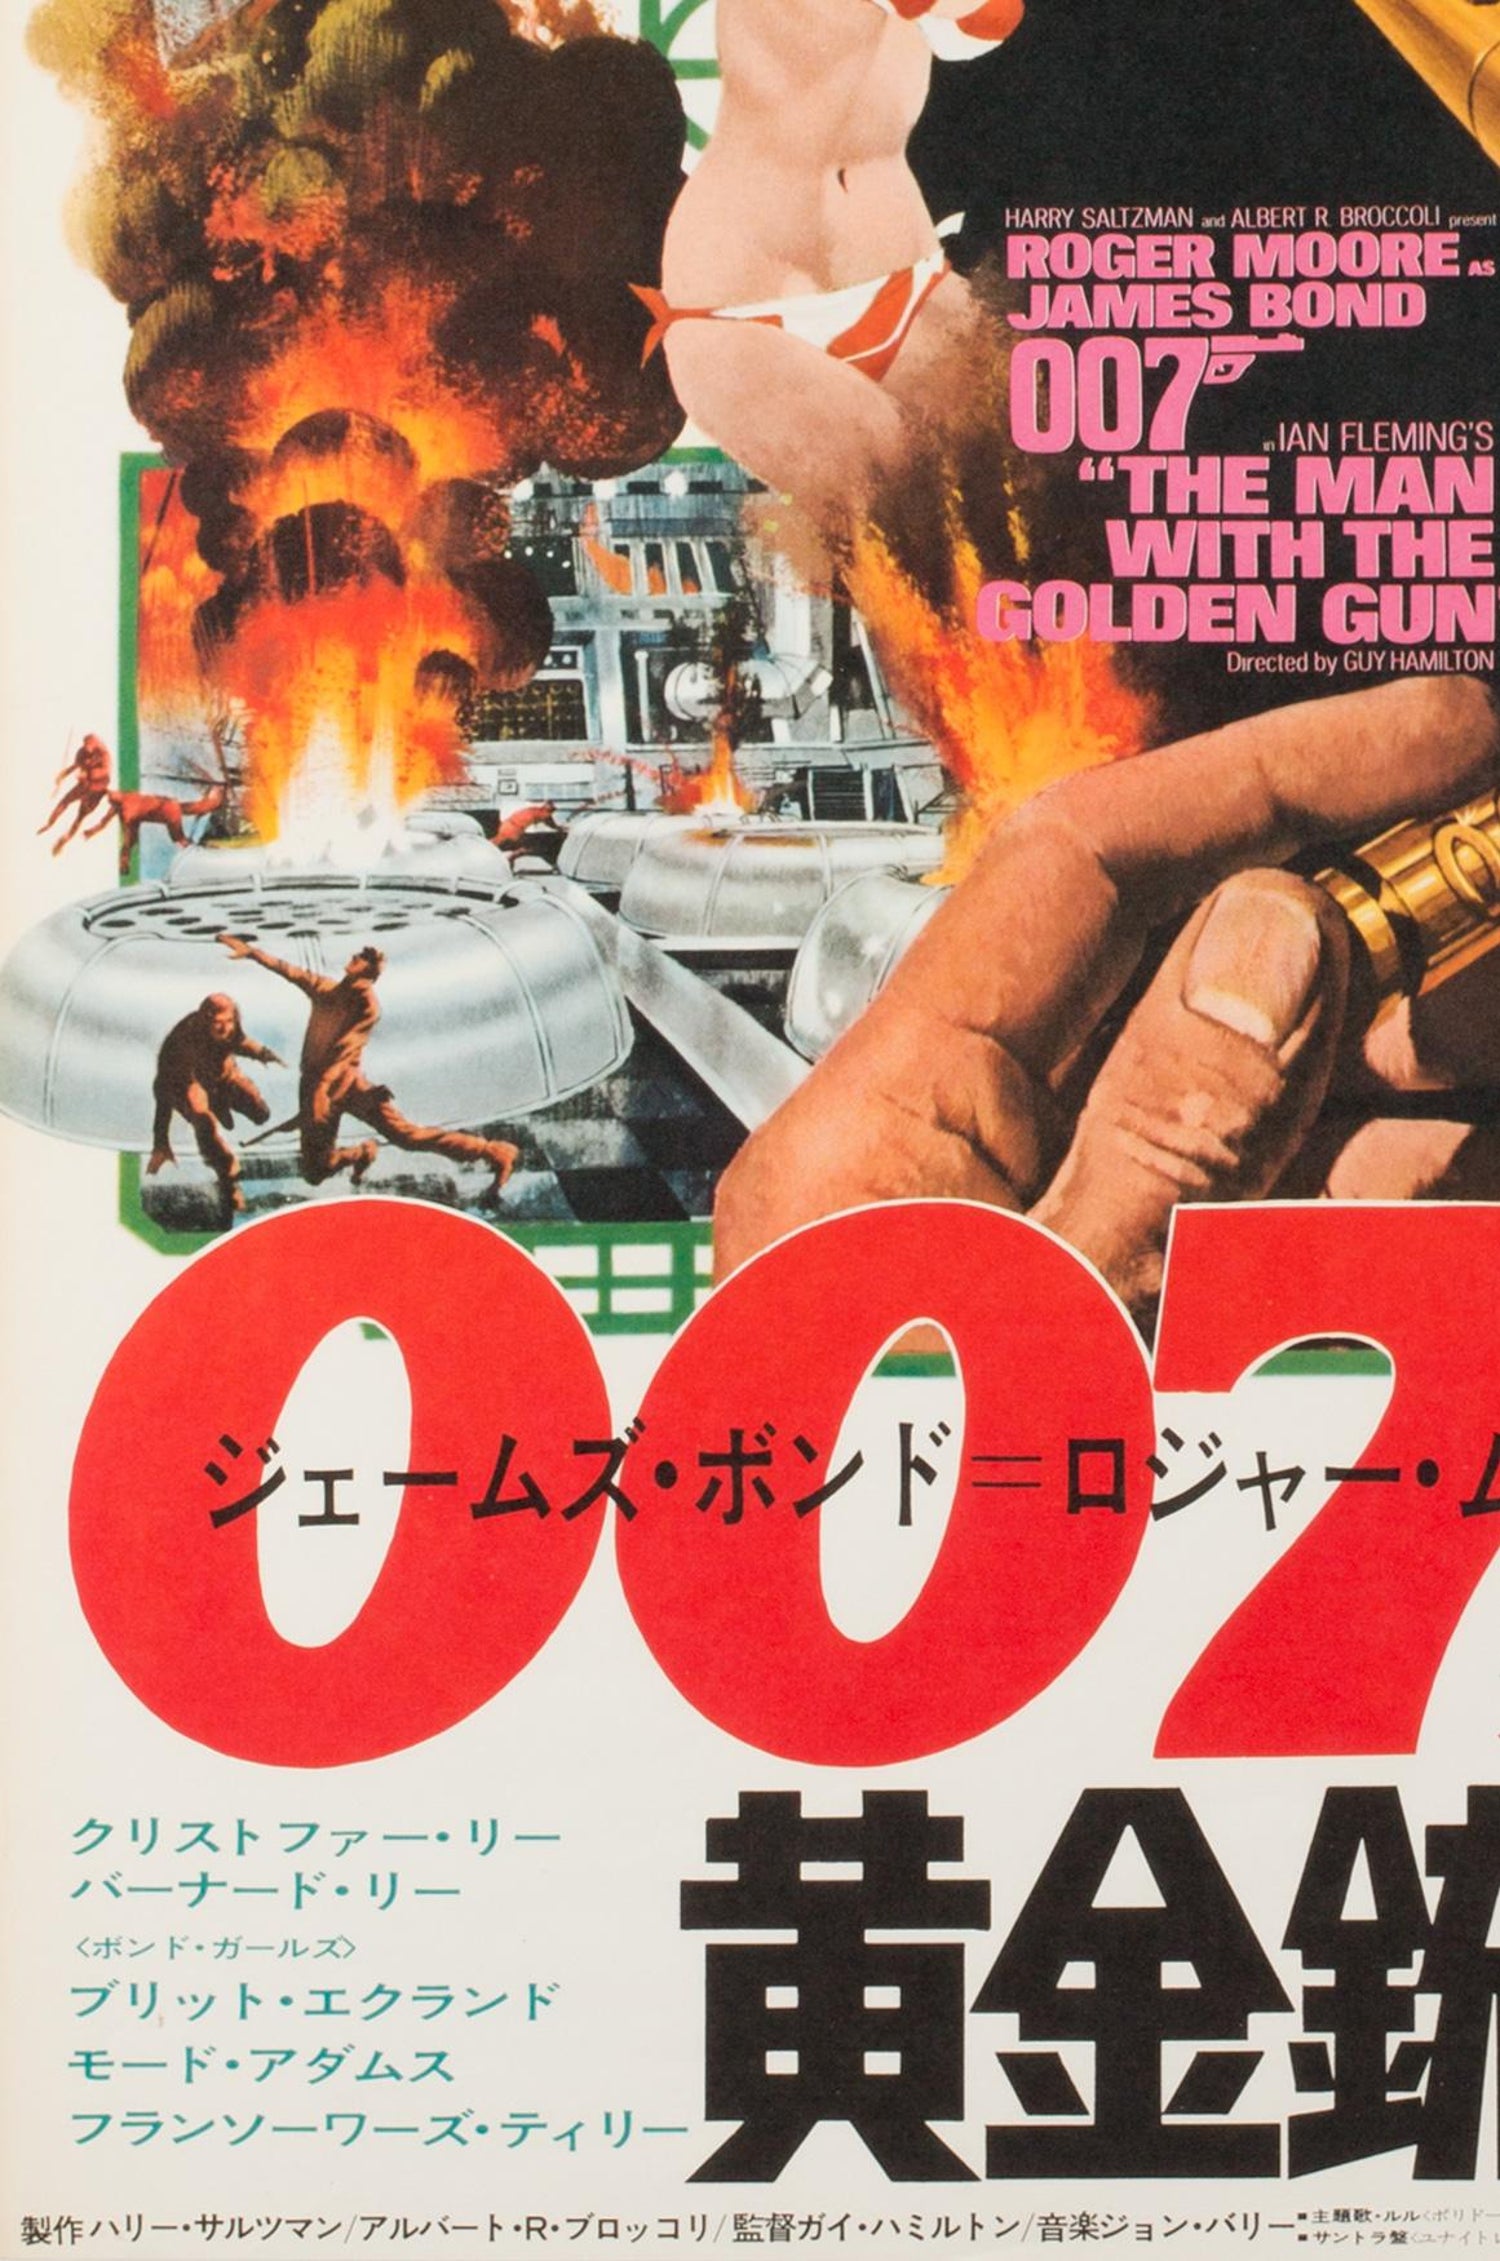 The_Man_with_the_Golden_Gun_1974_Japanese_B2_Film_Poster_3_master.jpg?width=1500